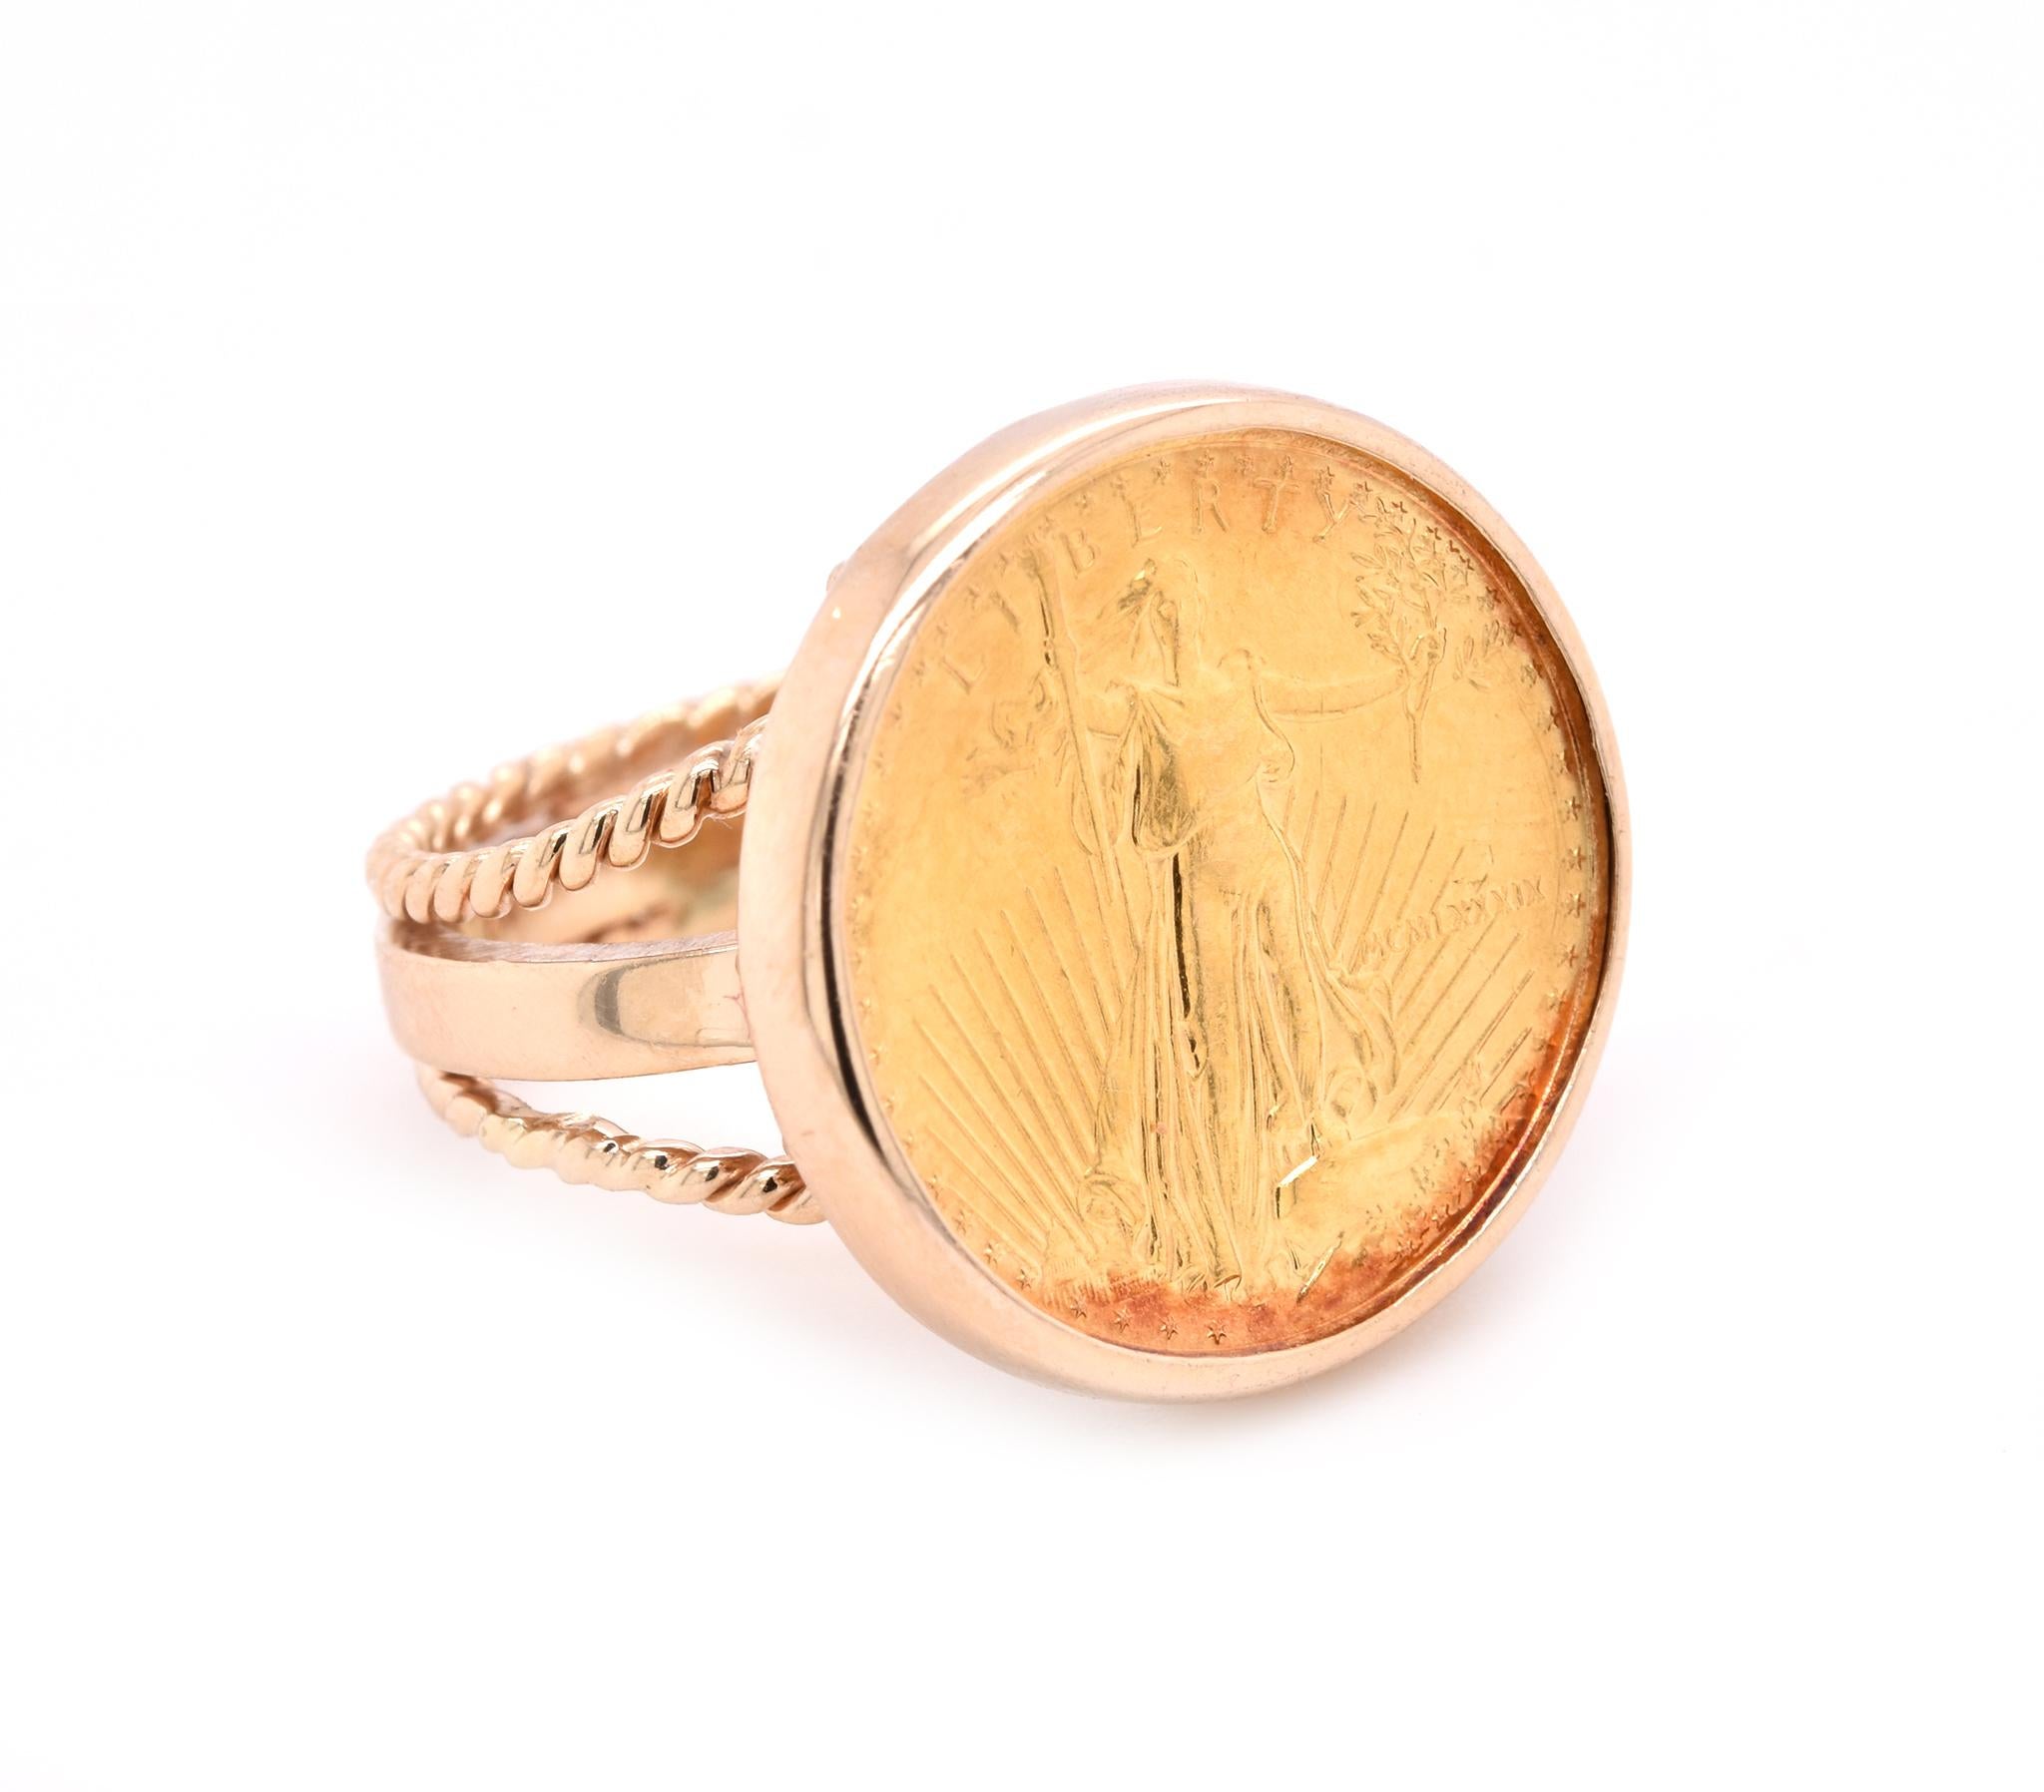 Designer: custom design
Material: 14k yellow gold
Dimensions: ring top measures 17.55mm wide
Ring Size: 4.25
Weight: 4.63 grams / 3.30 grams PURE
